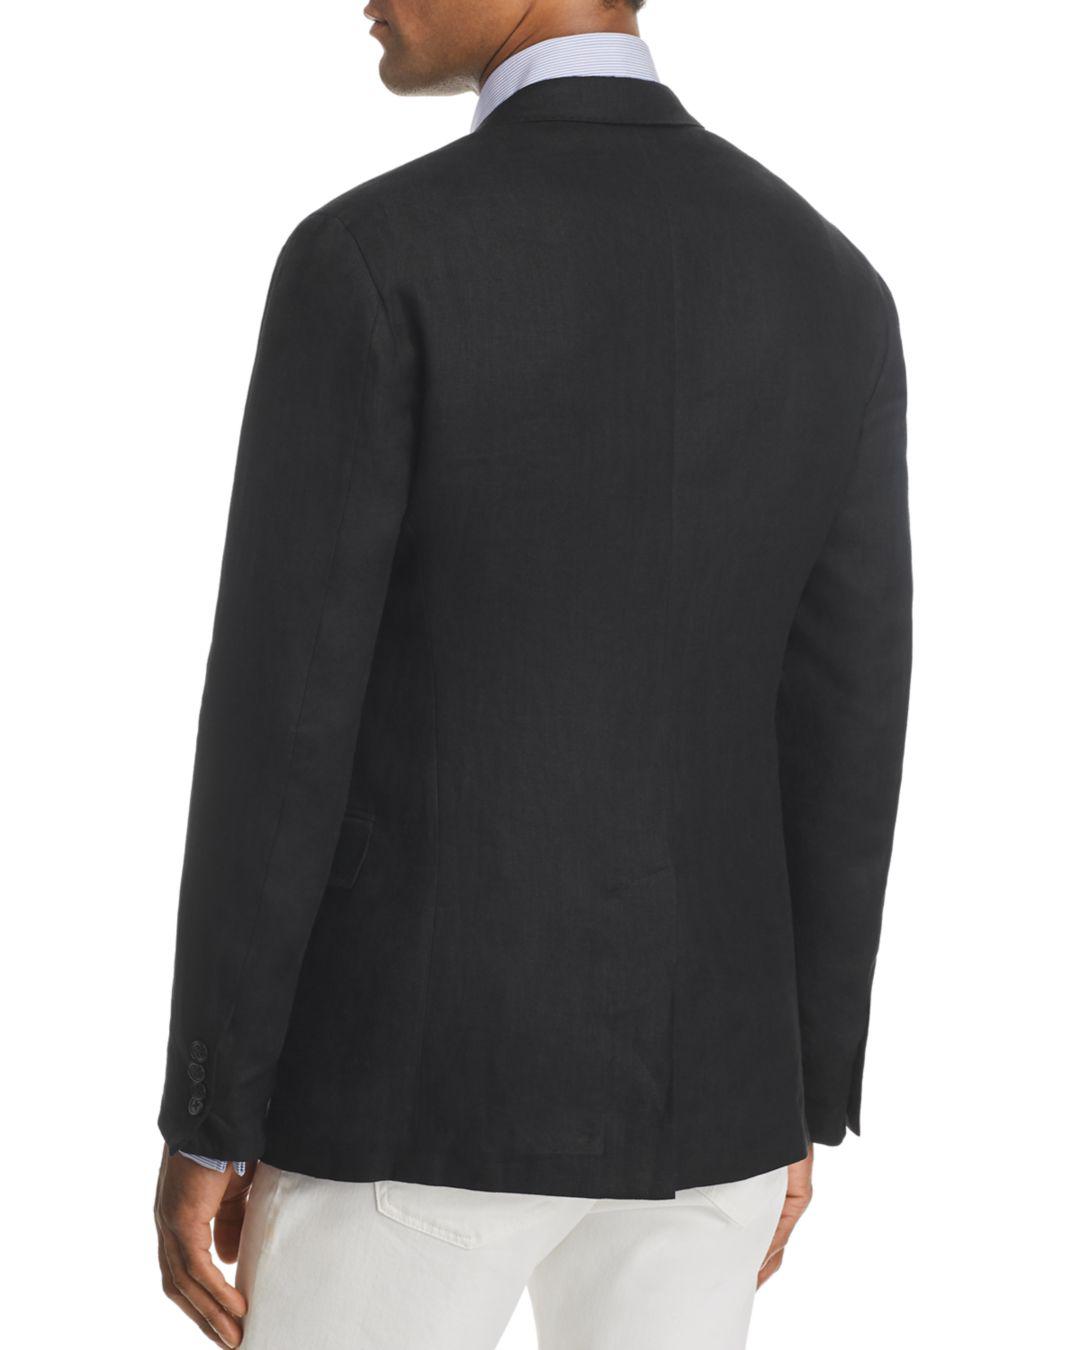 Polo Ralph Lauren Morgan Fit Crest Blazer in Black for Men - Lyst